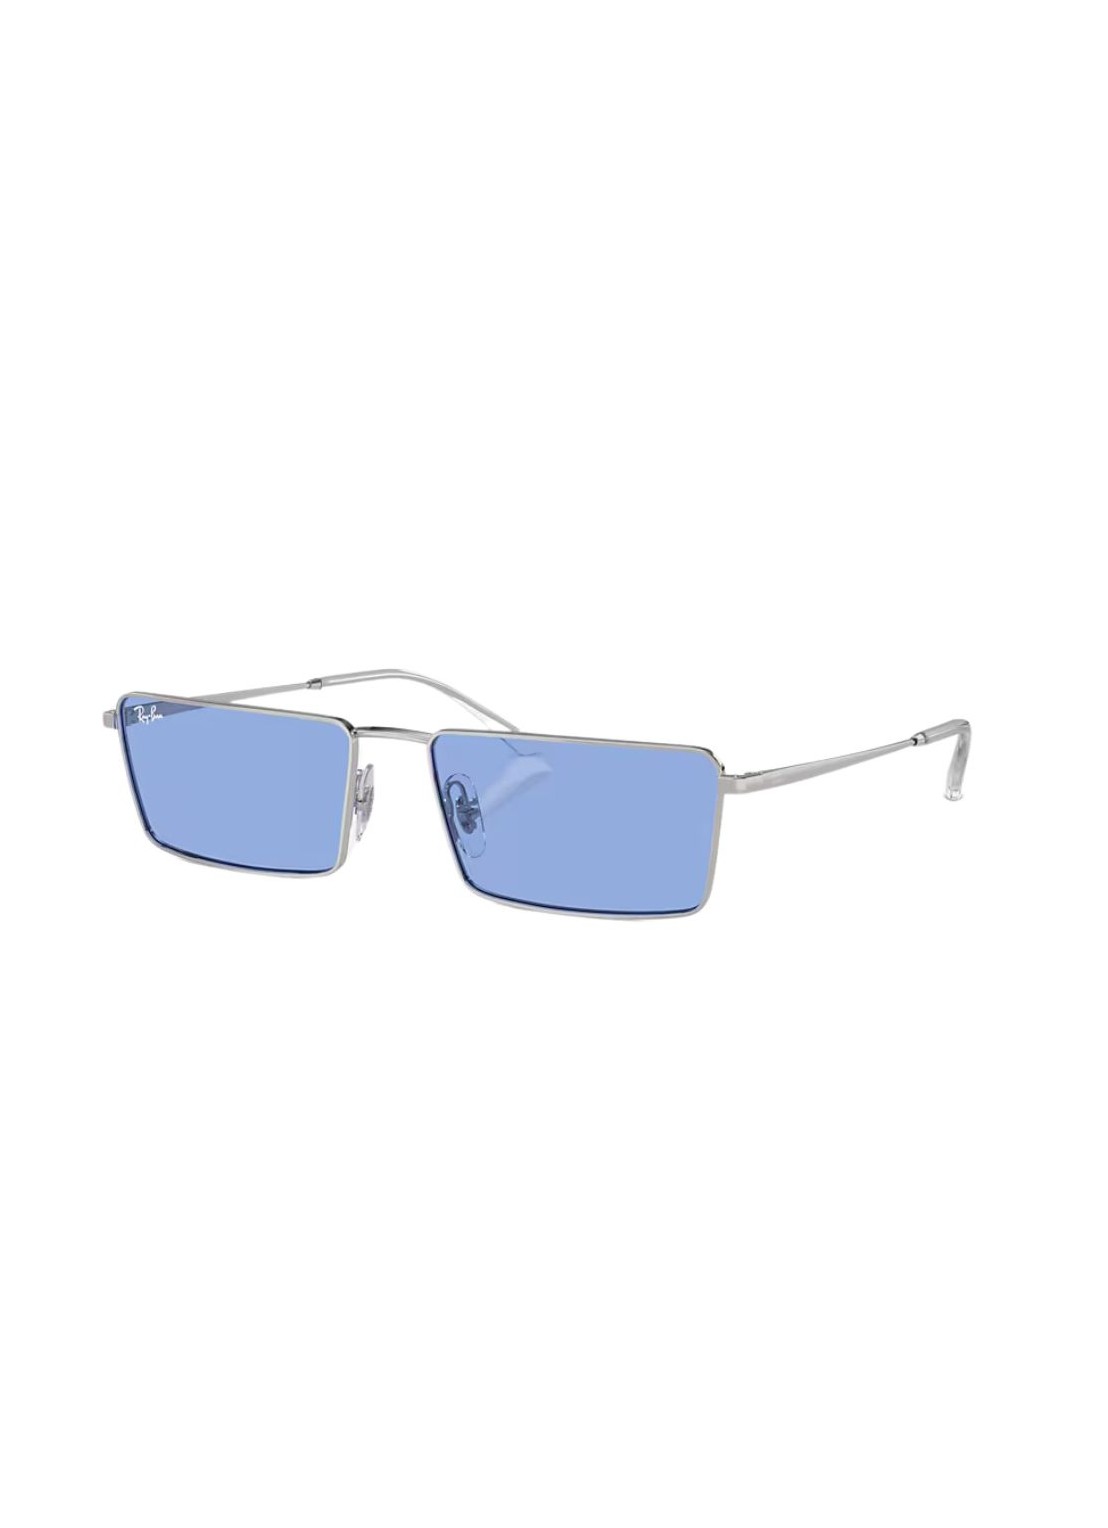 Gafas rayban sunglasses unisex0rb3741 - 0rb3741 003/80 talla transparente
 